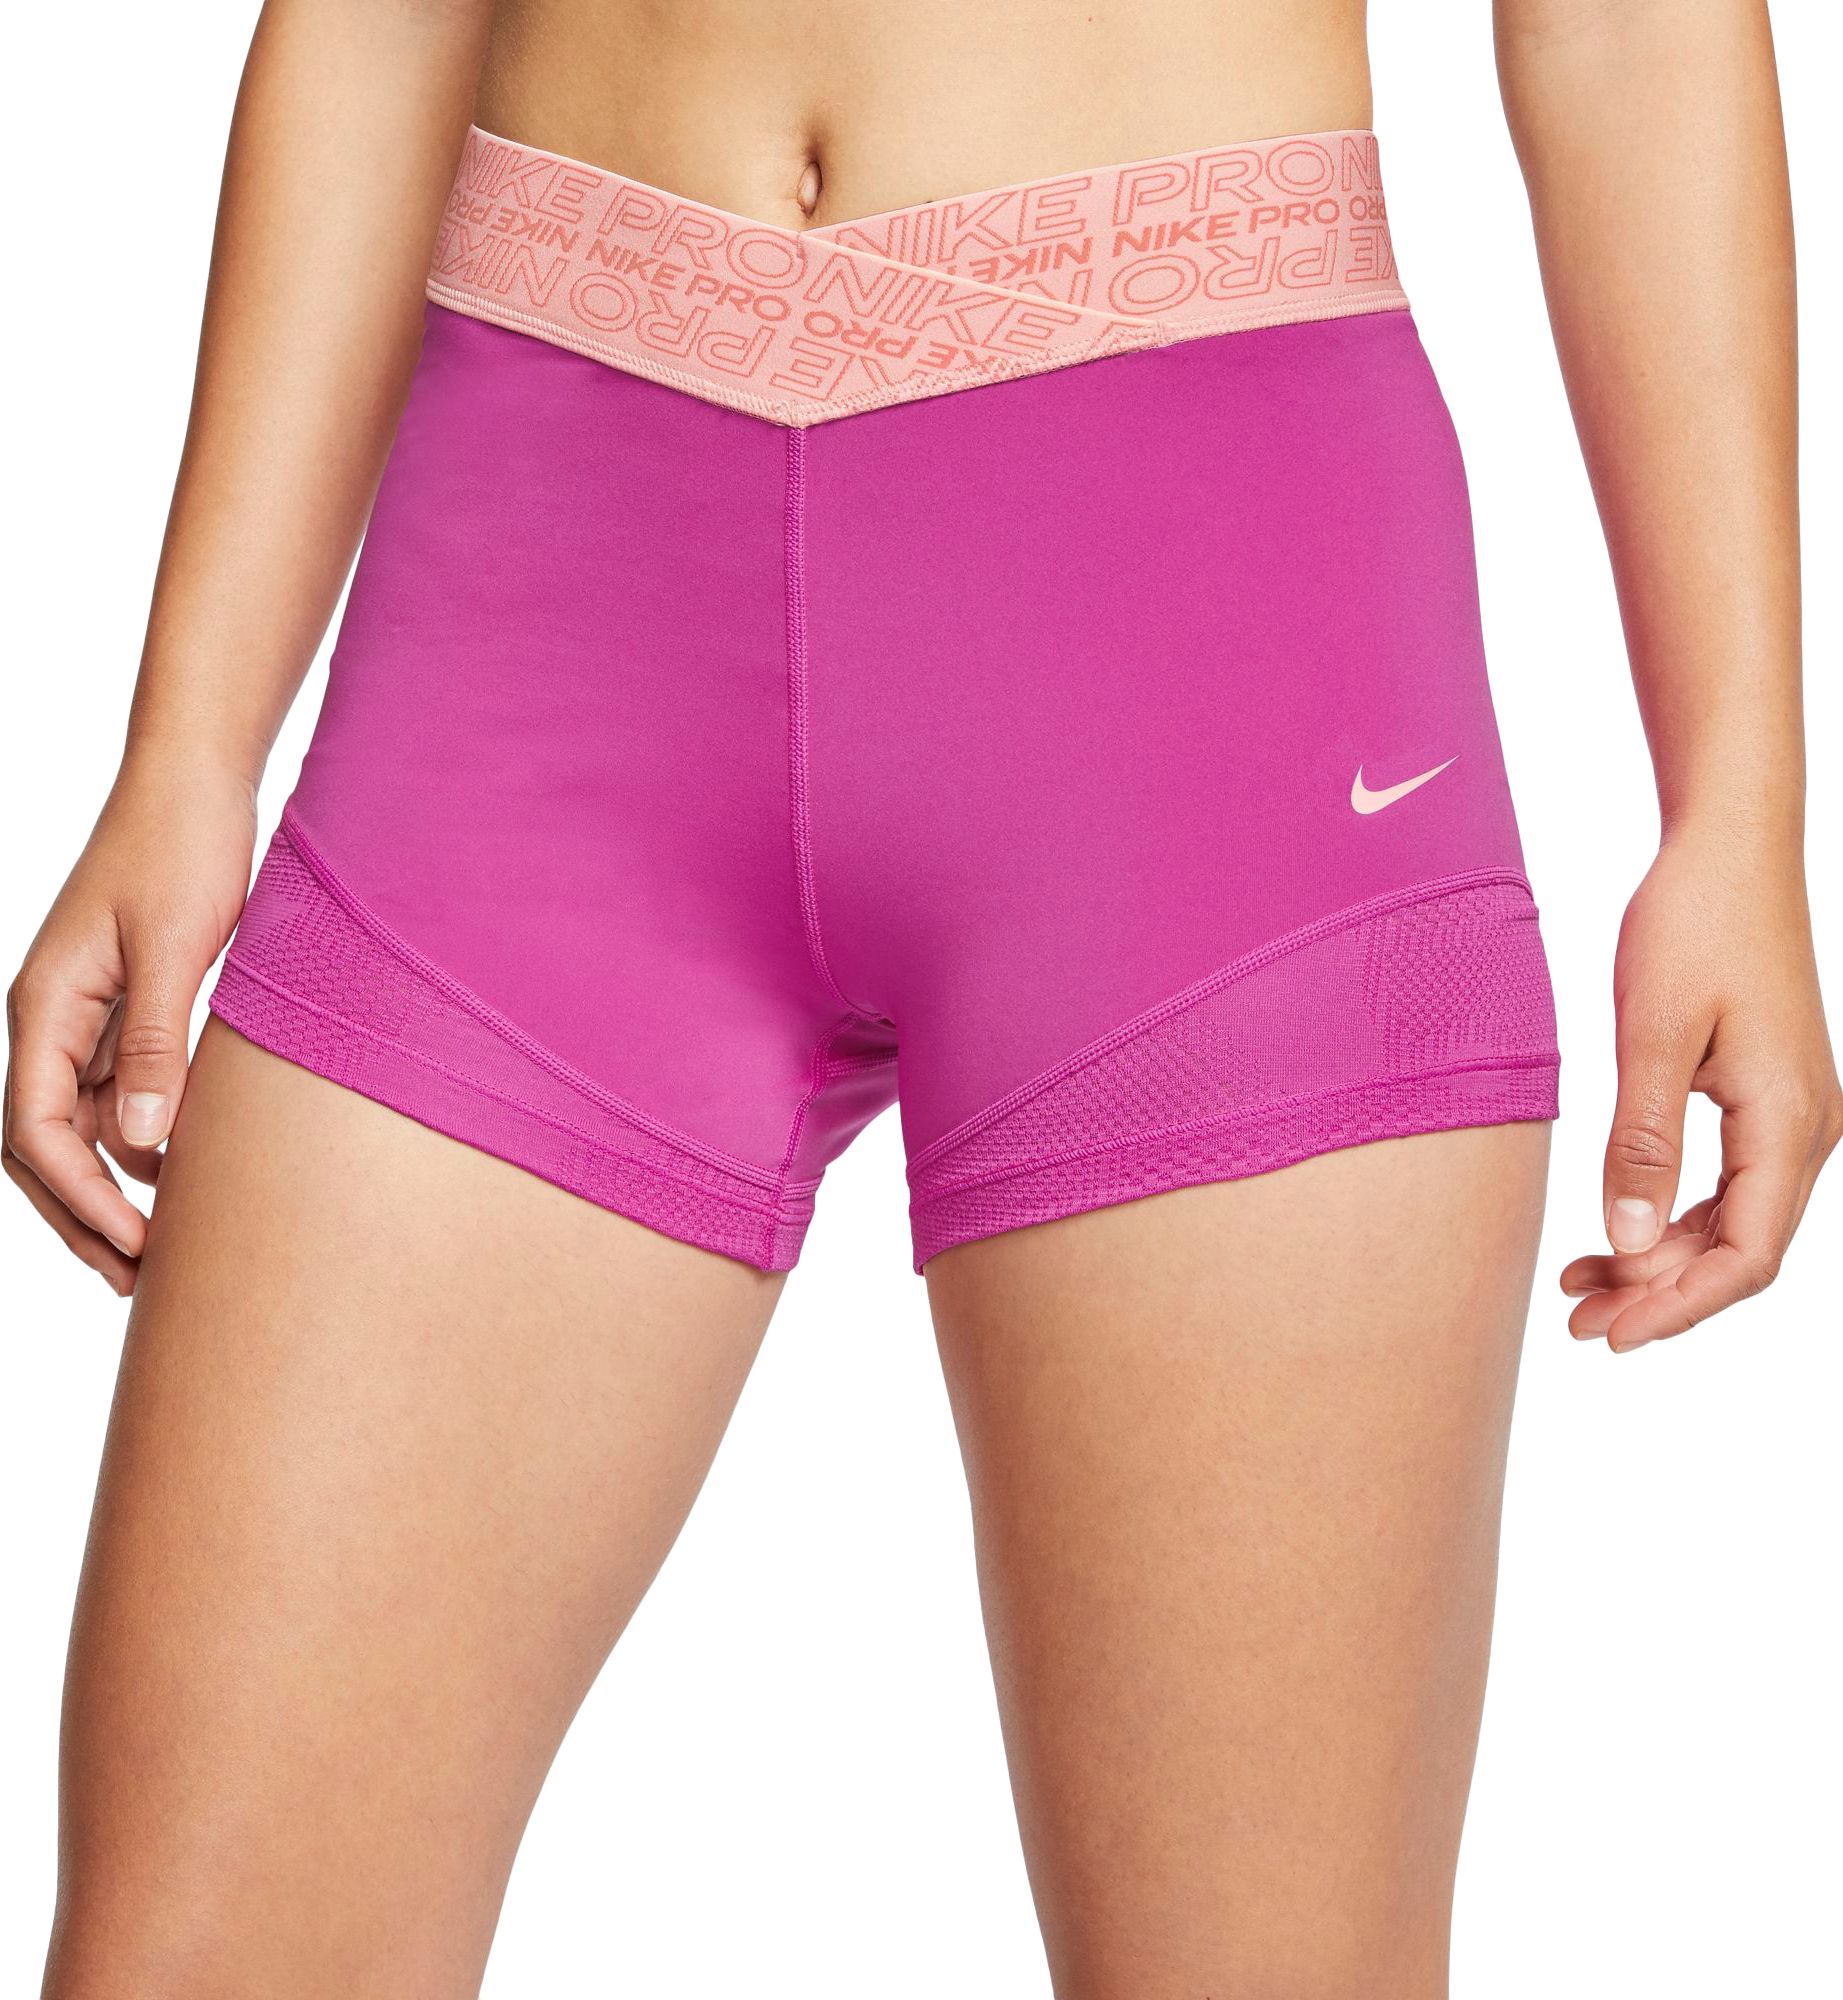 dicks sporting goods womens nike shorts